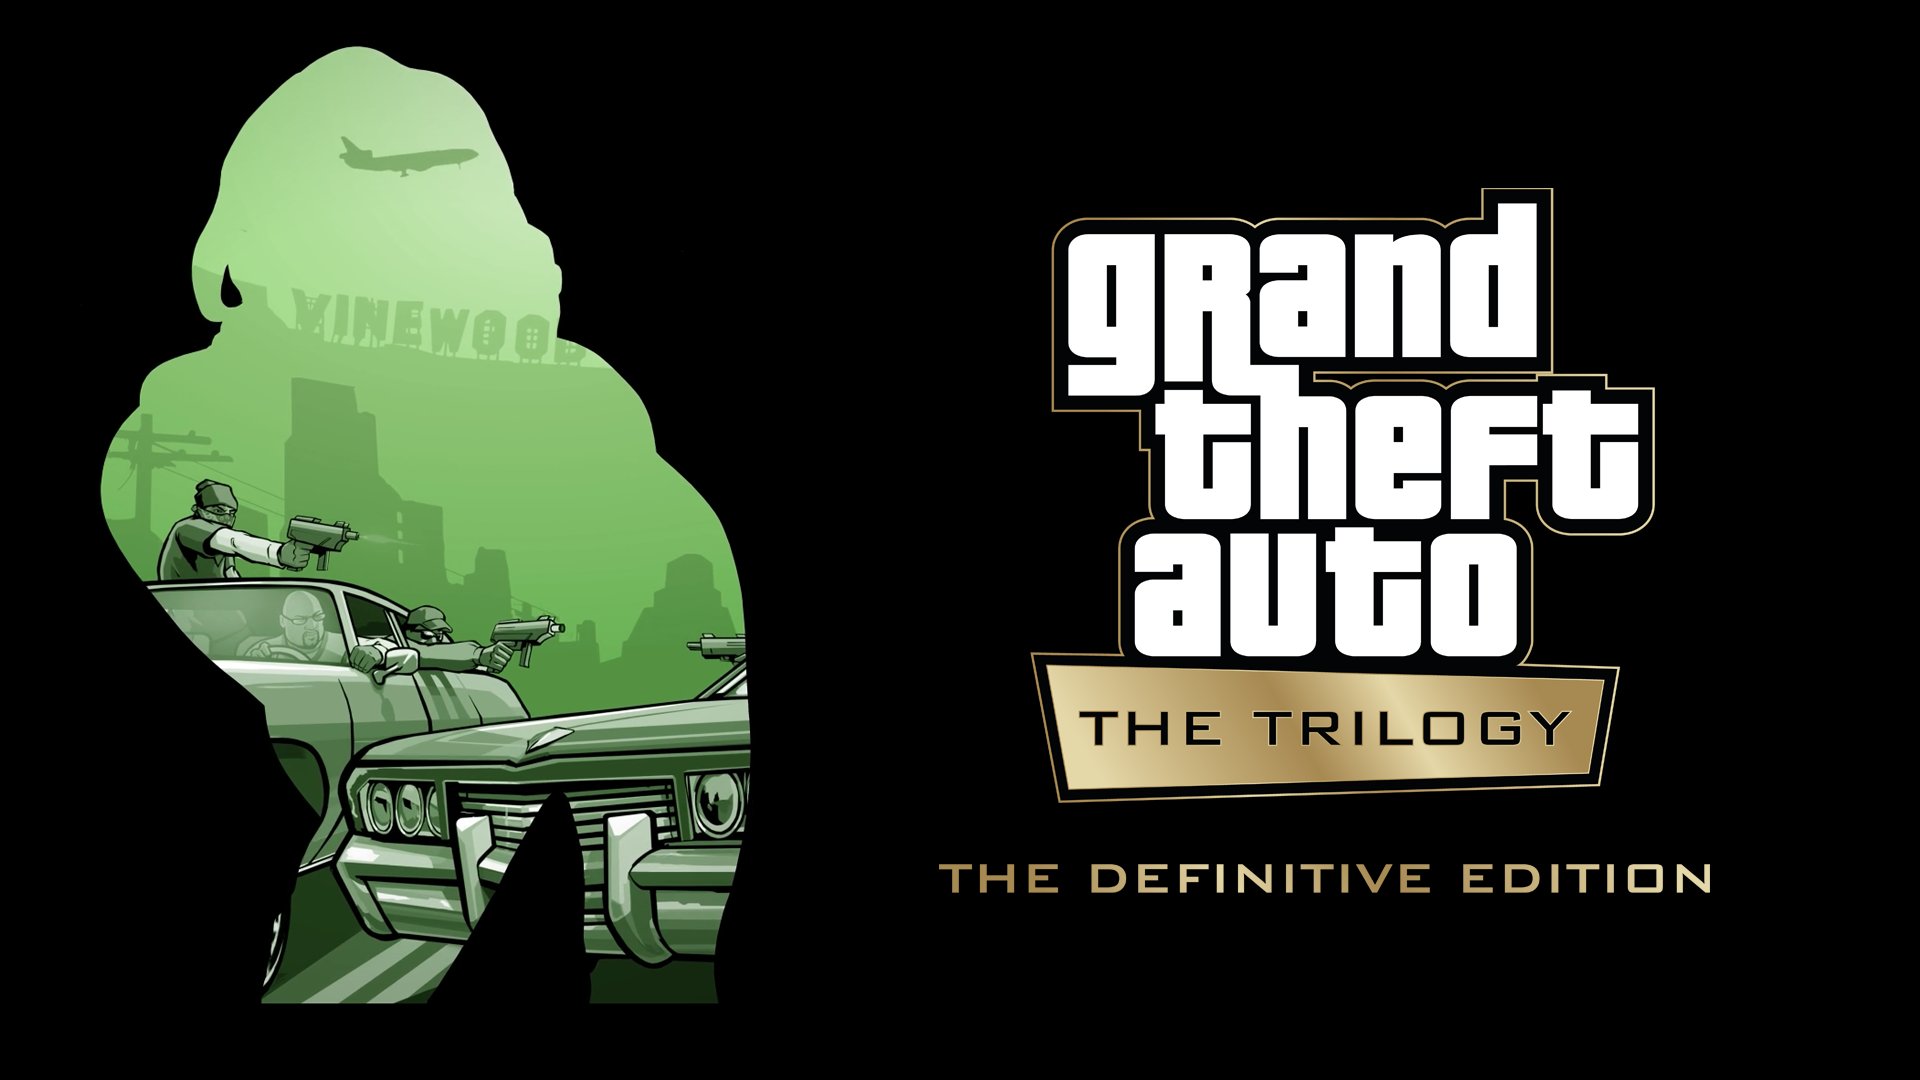 Grand Theft Auto: San Andreas HD Wallpaper